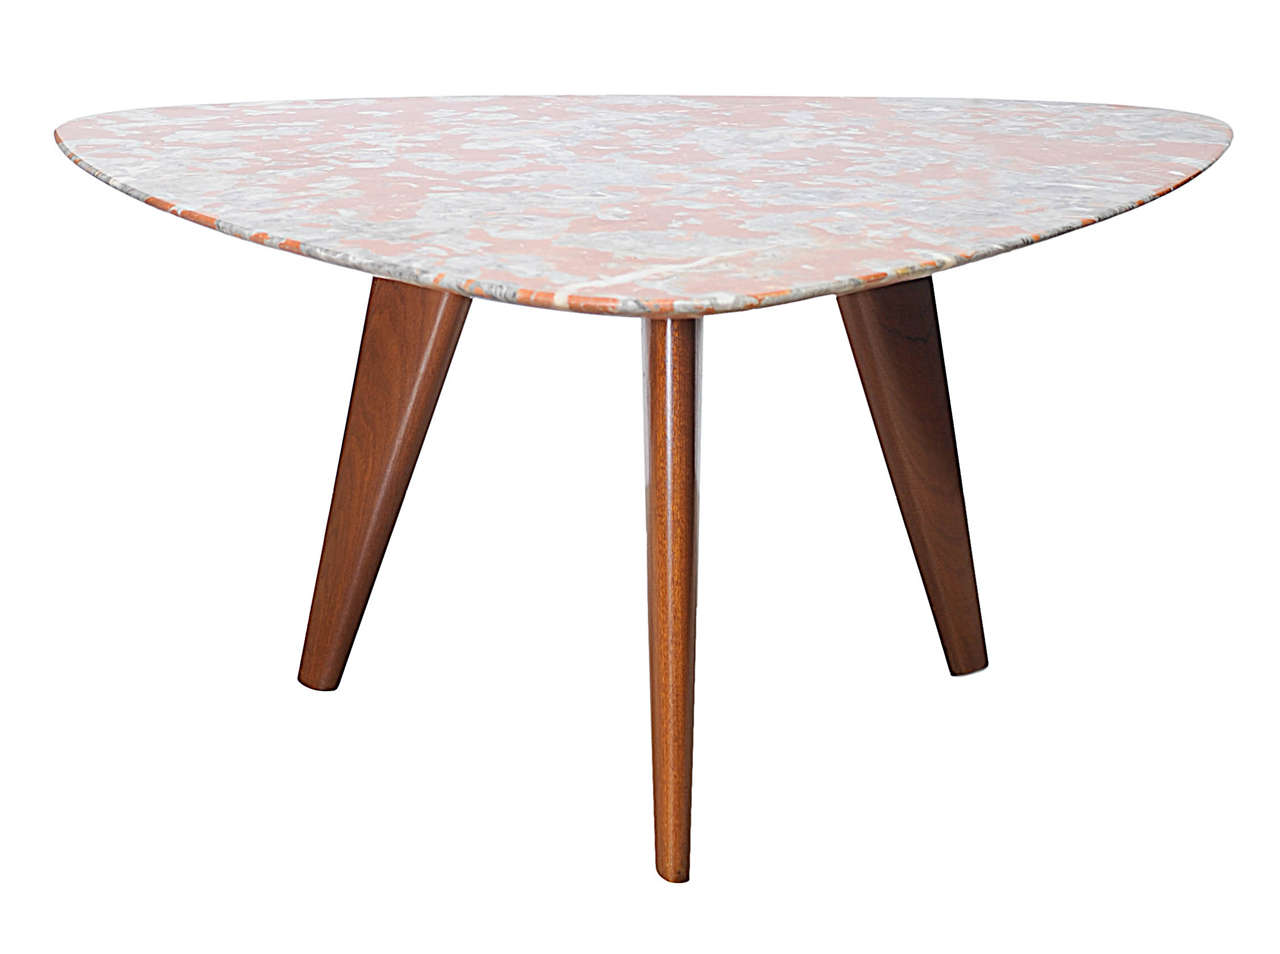 Low table with triangular shape marble top.
Rosewood base.
Designed by Osvaldo Borsani, 1950s.